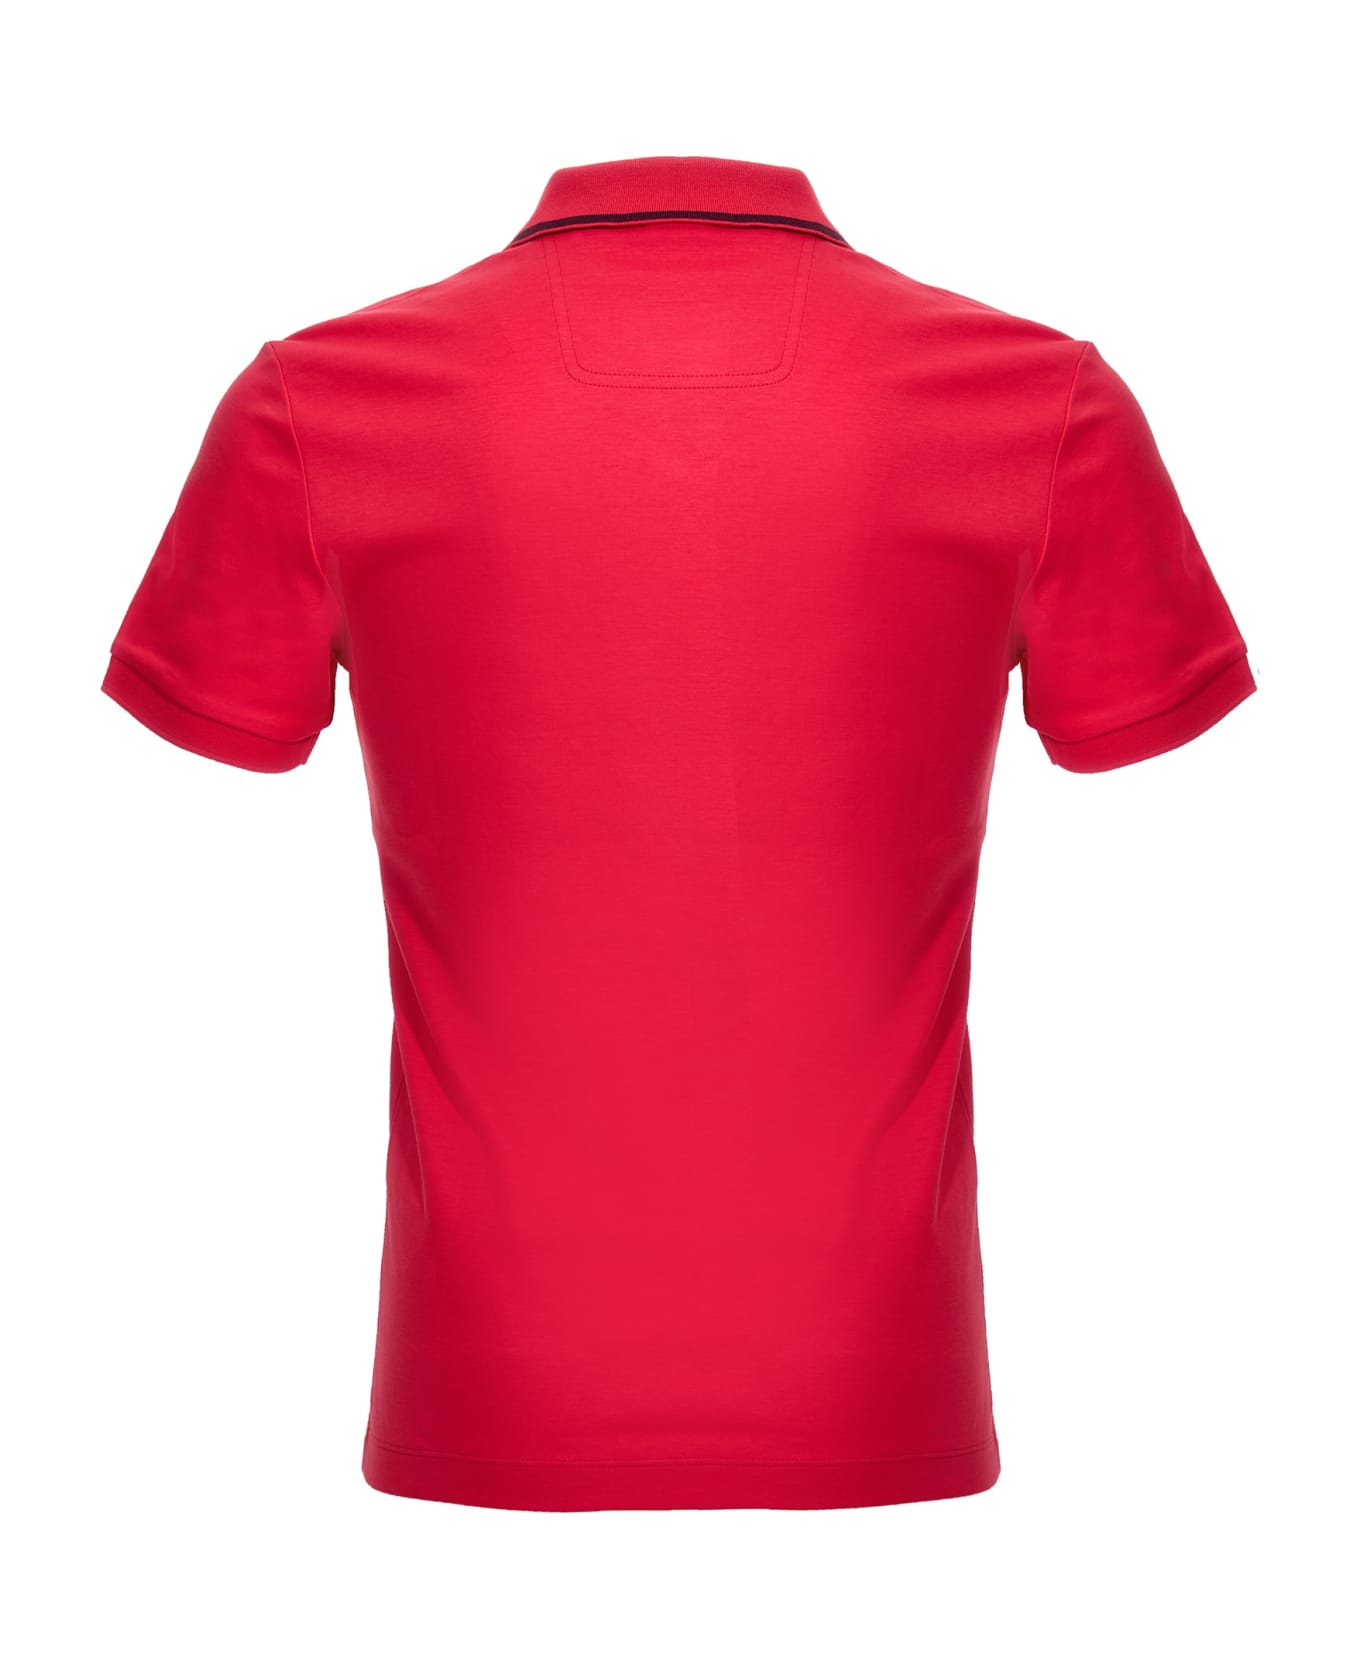 Hugo Boss Logo Polo Shirt - Fuchsia